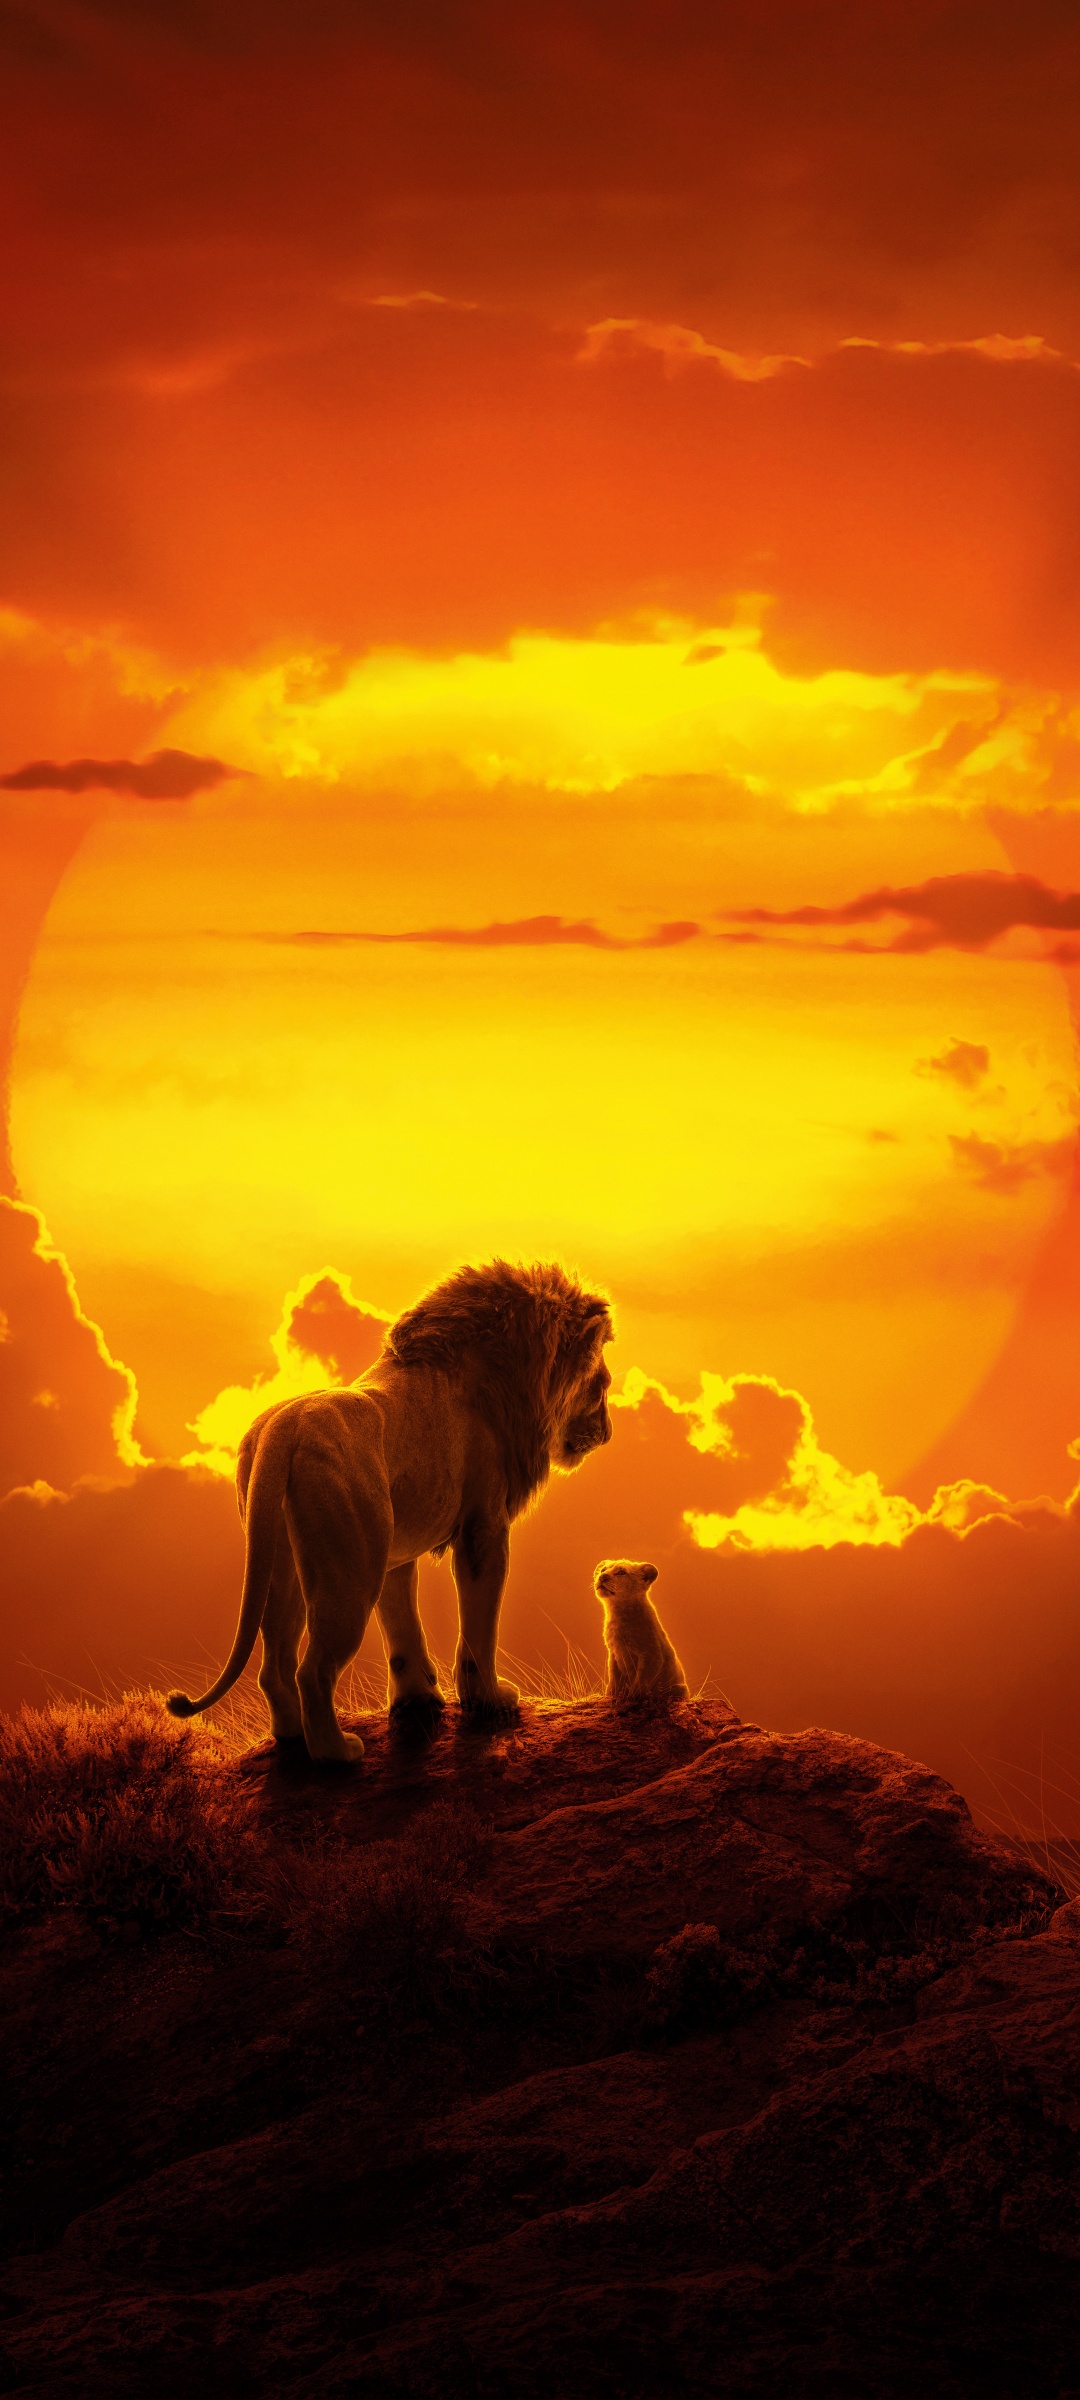 The Lion King Wallpaper 4K, Simba, Mufasa, Lion cub, Animation, Movies